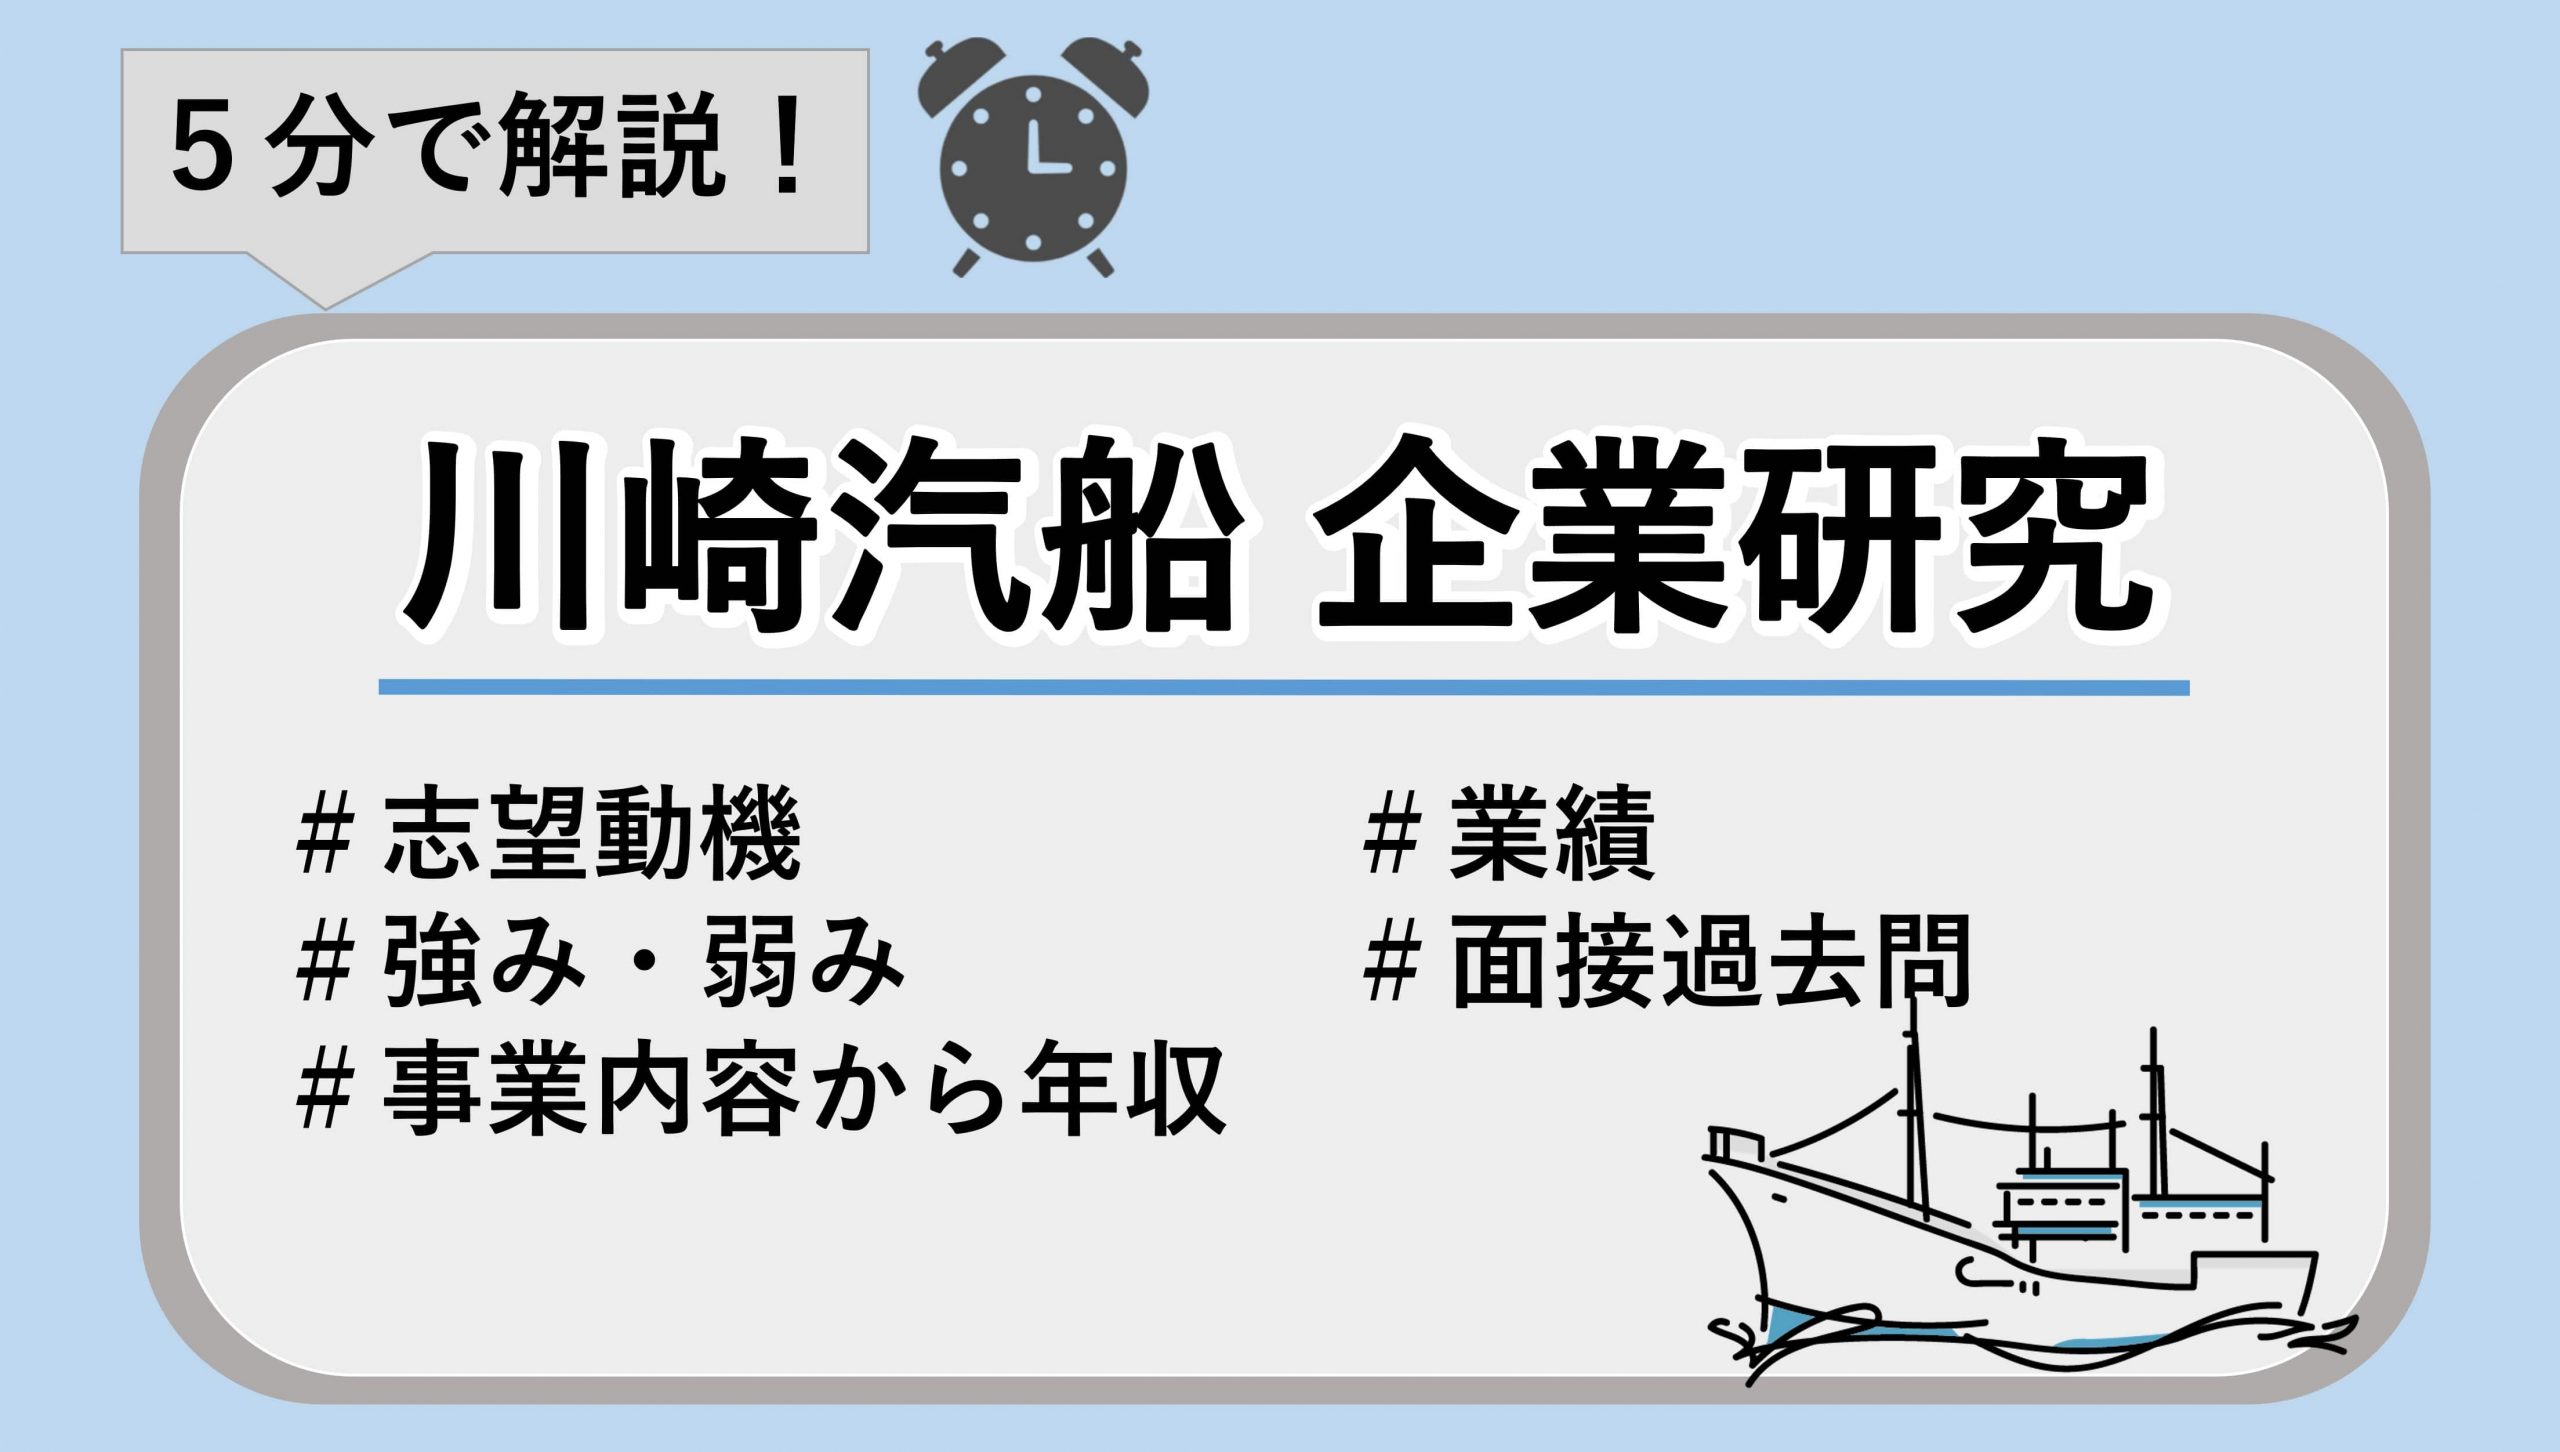 川崎汽船の企業研究